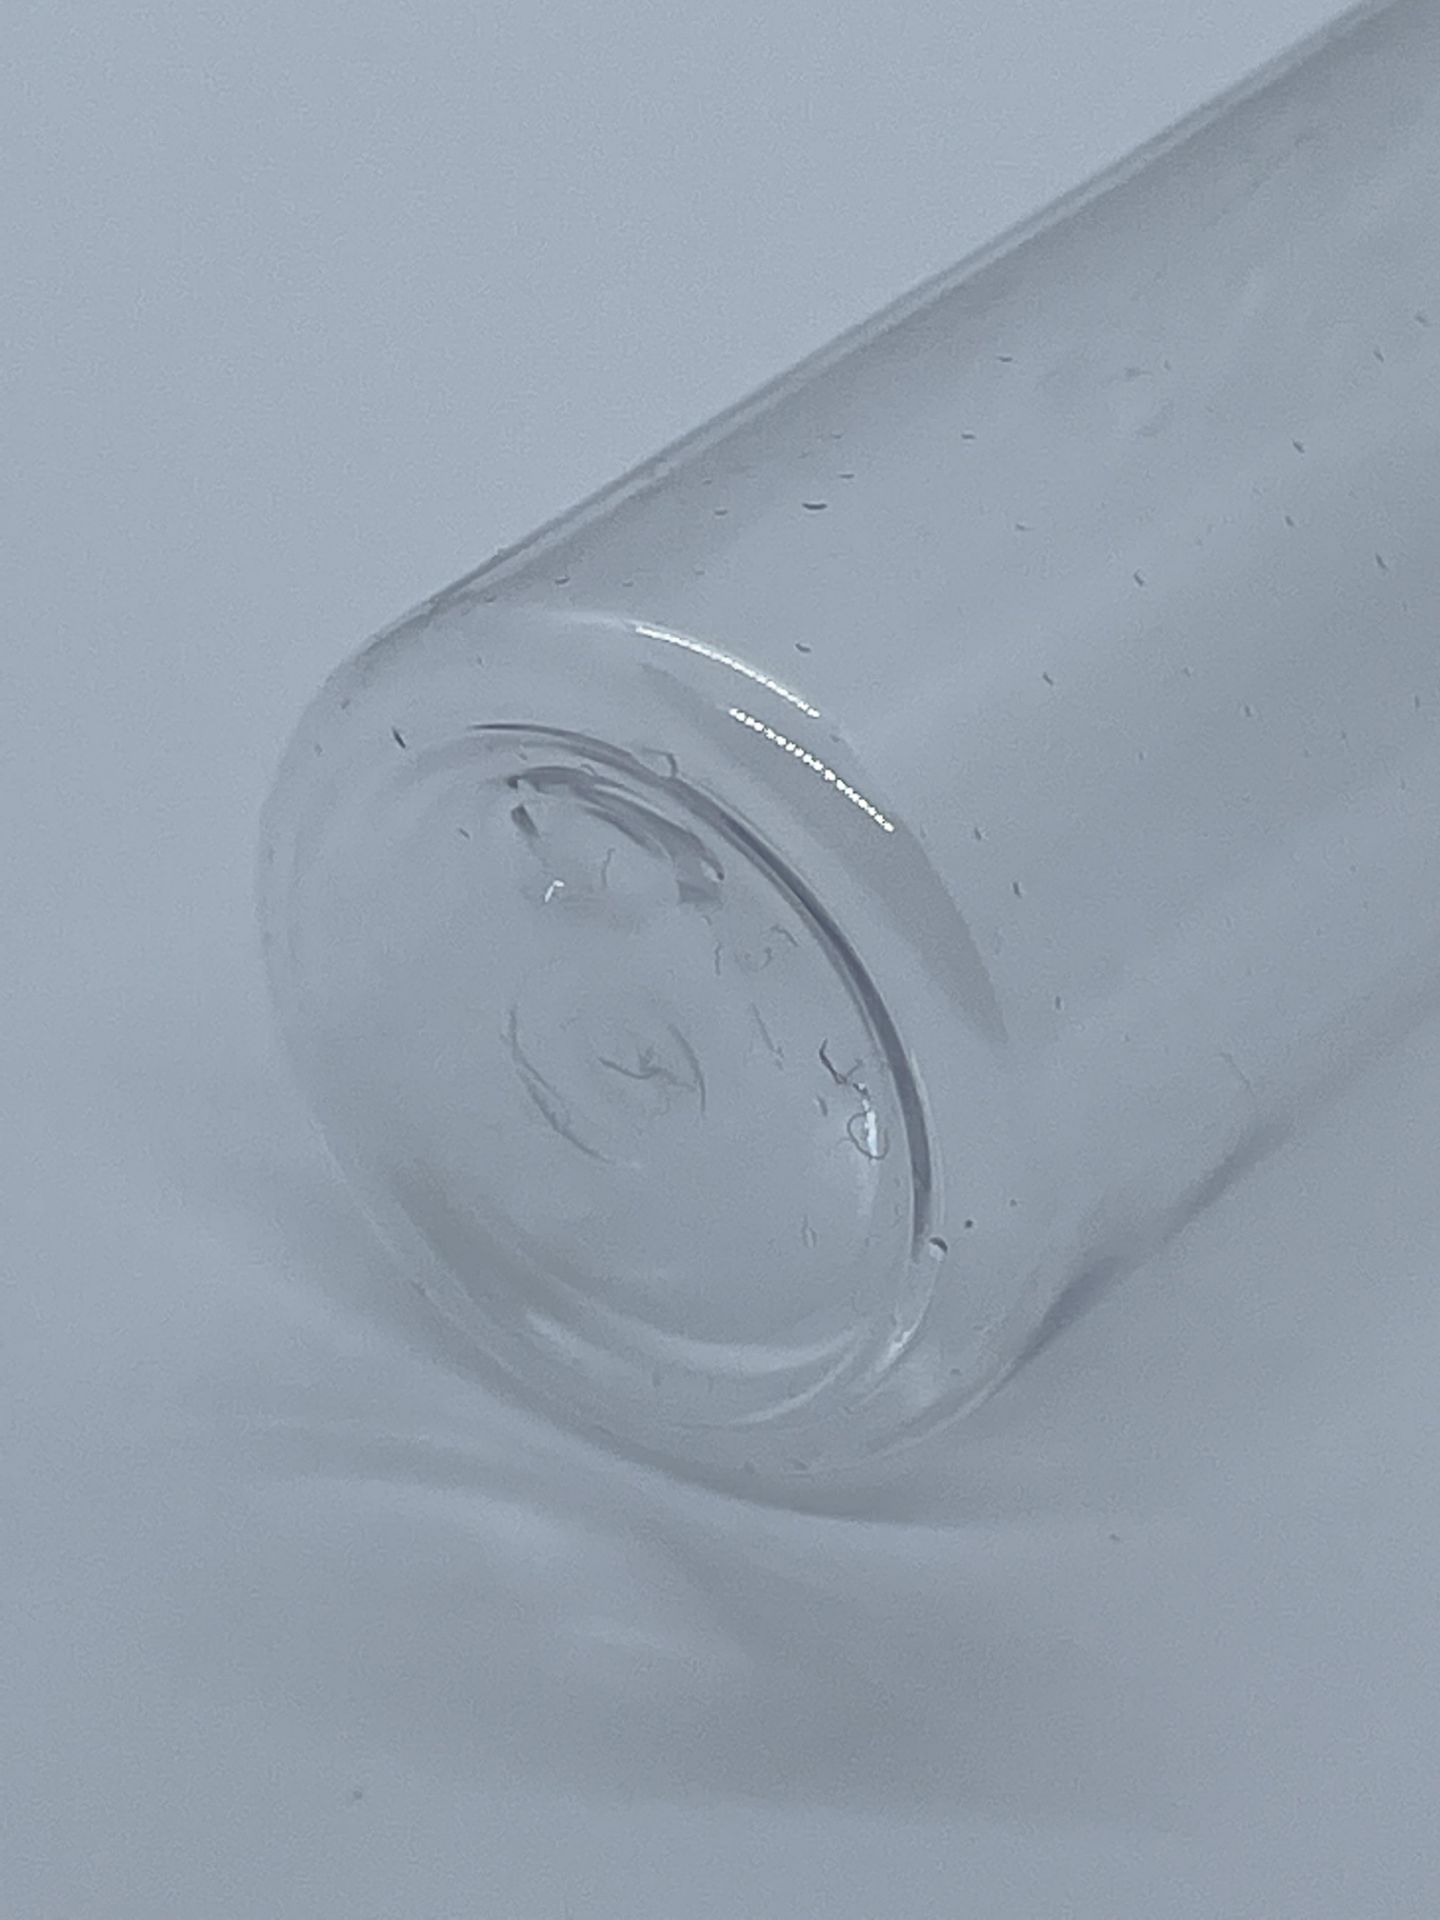 99,500 - Clear Plastic Bullet 2 oz Empty Bottles, 18-410 Threading Neck, 4.25" Tall 1.25" Diameter - Image 5 of 5